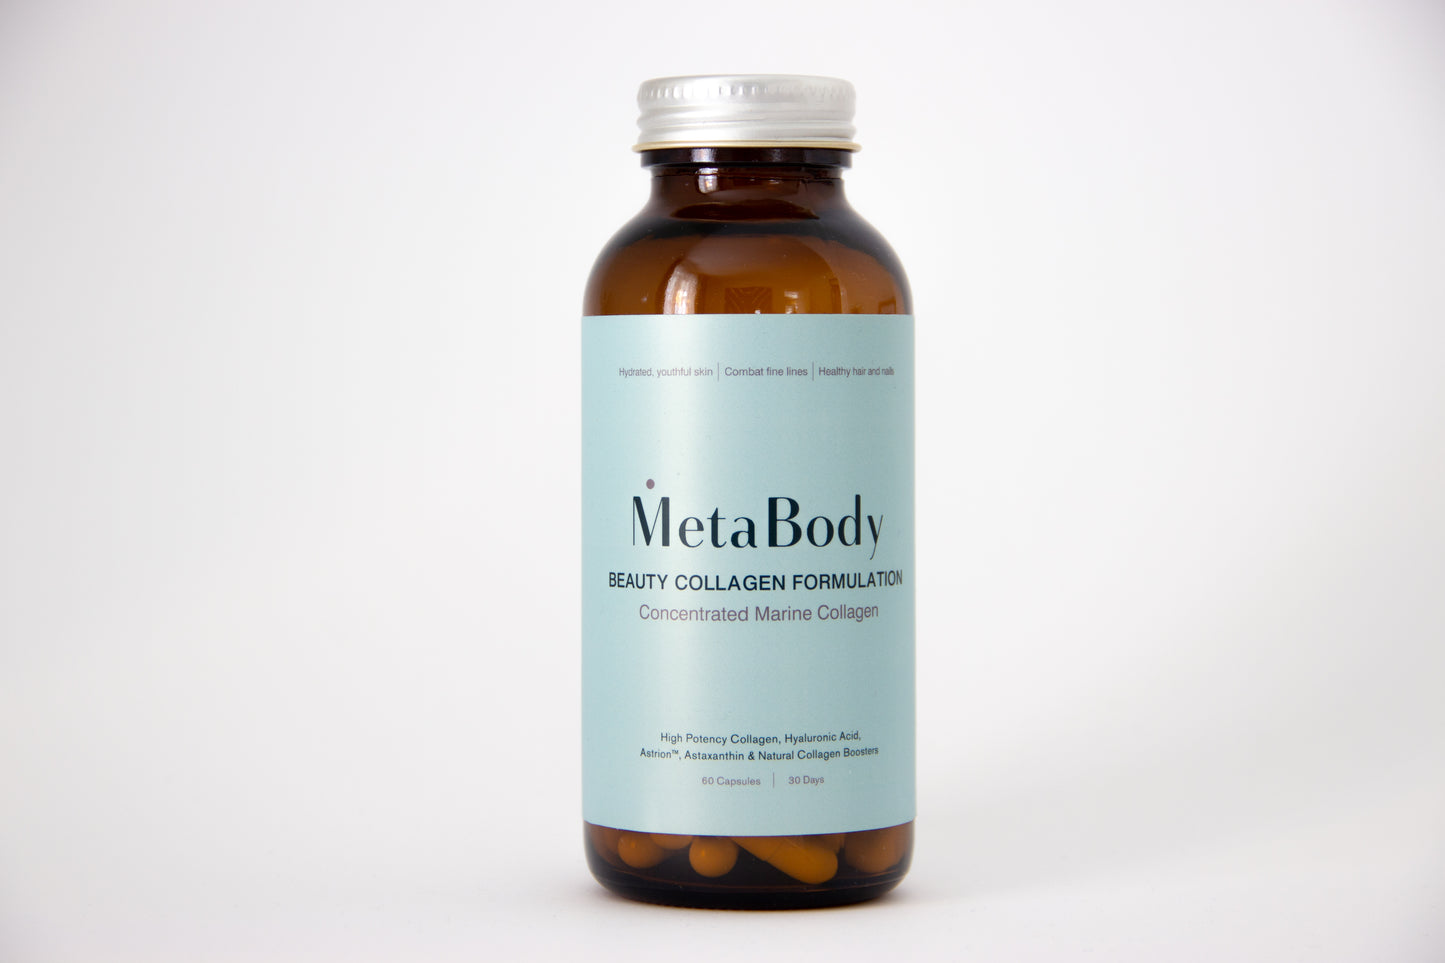 MetaBody Beauty Collagen Formulation